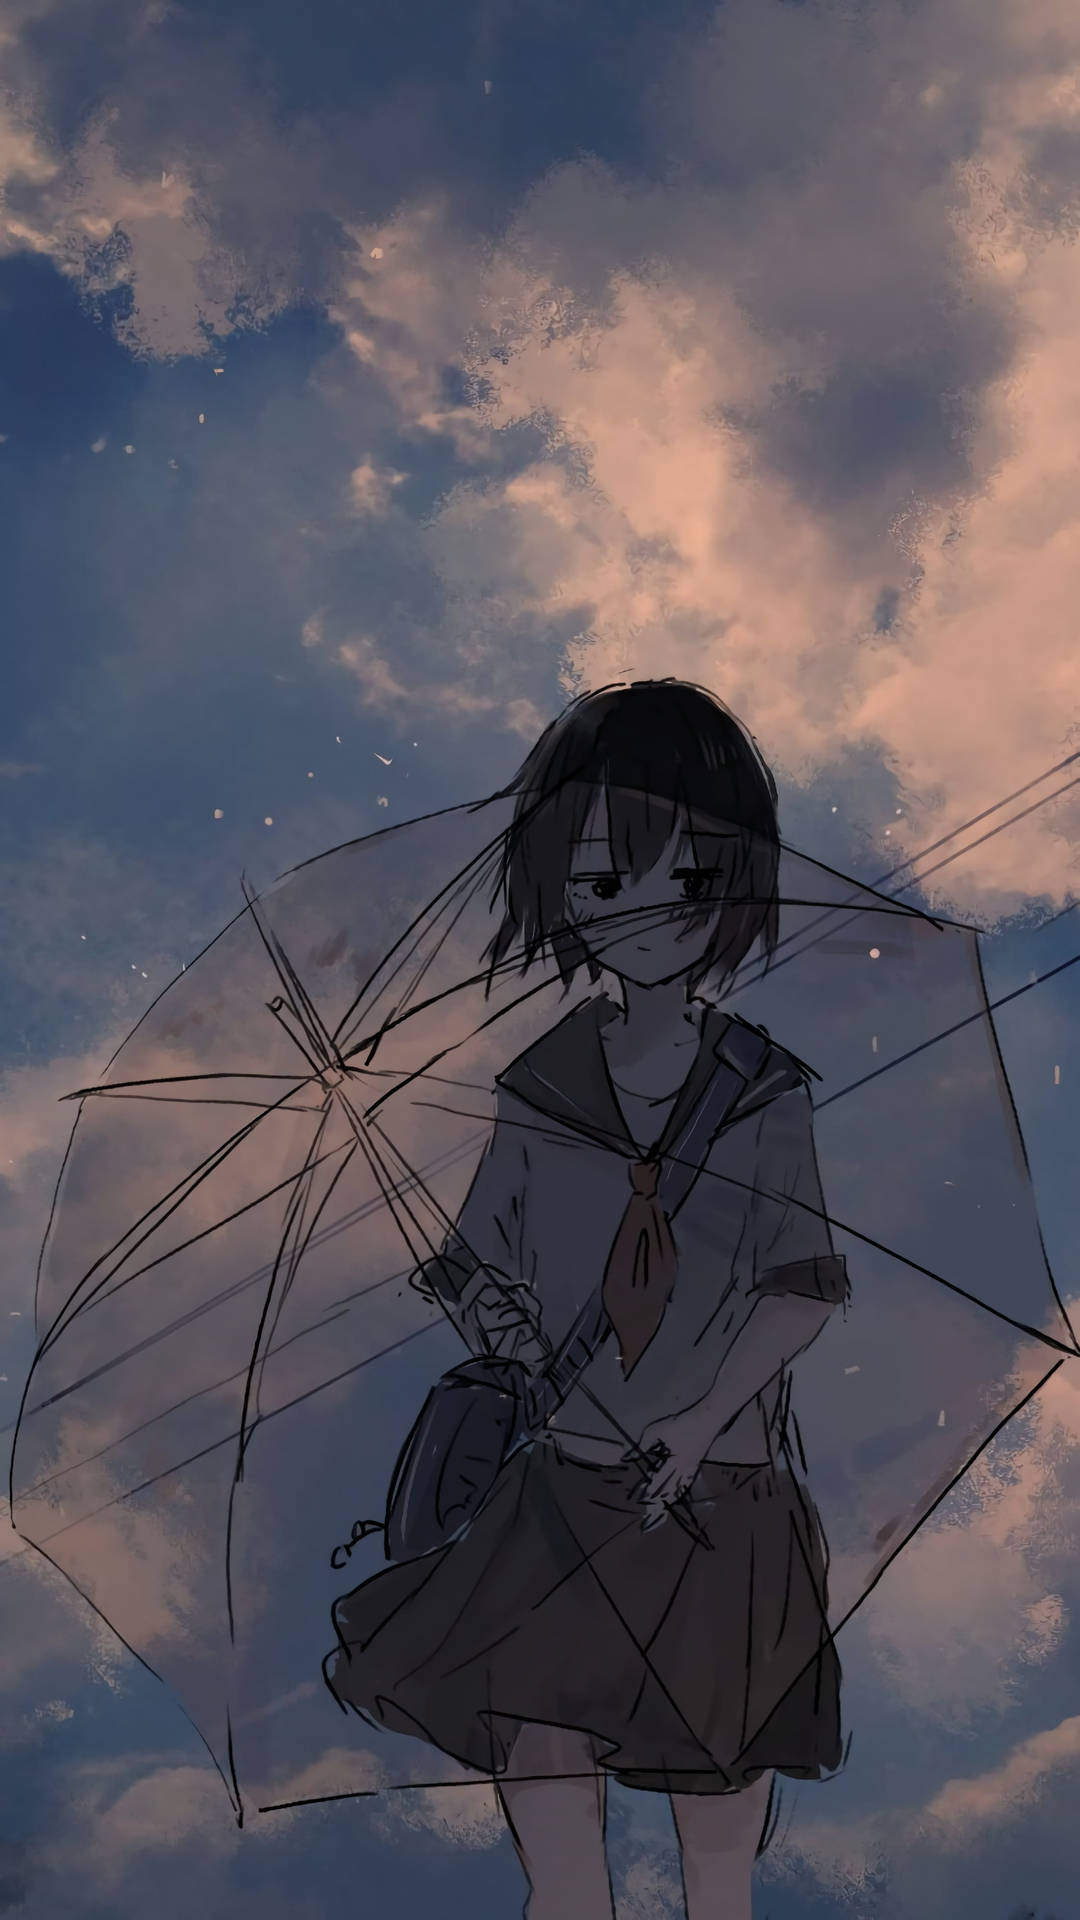 Sad Aesthetic Anime Girl With Umbrella Wallpaper